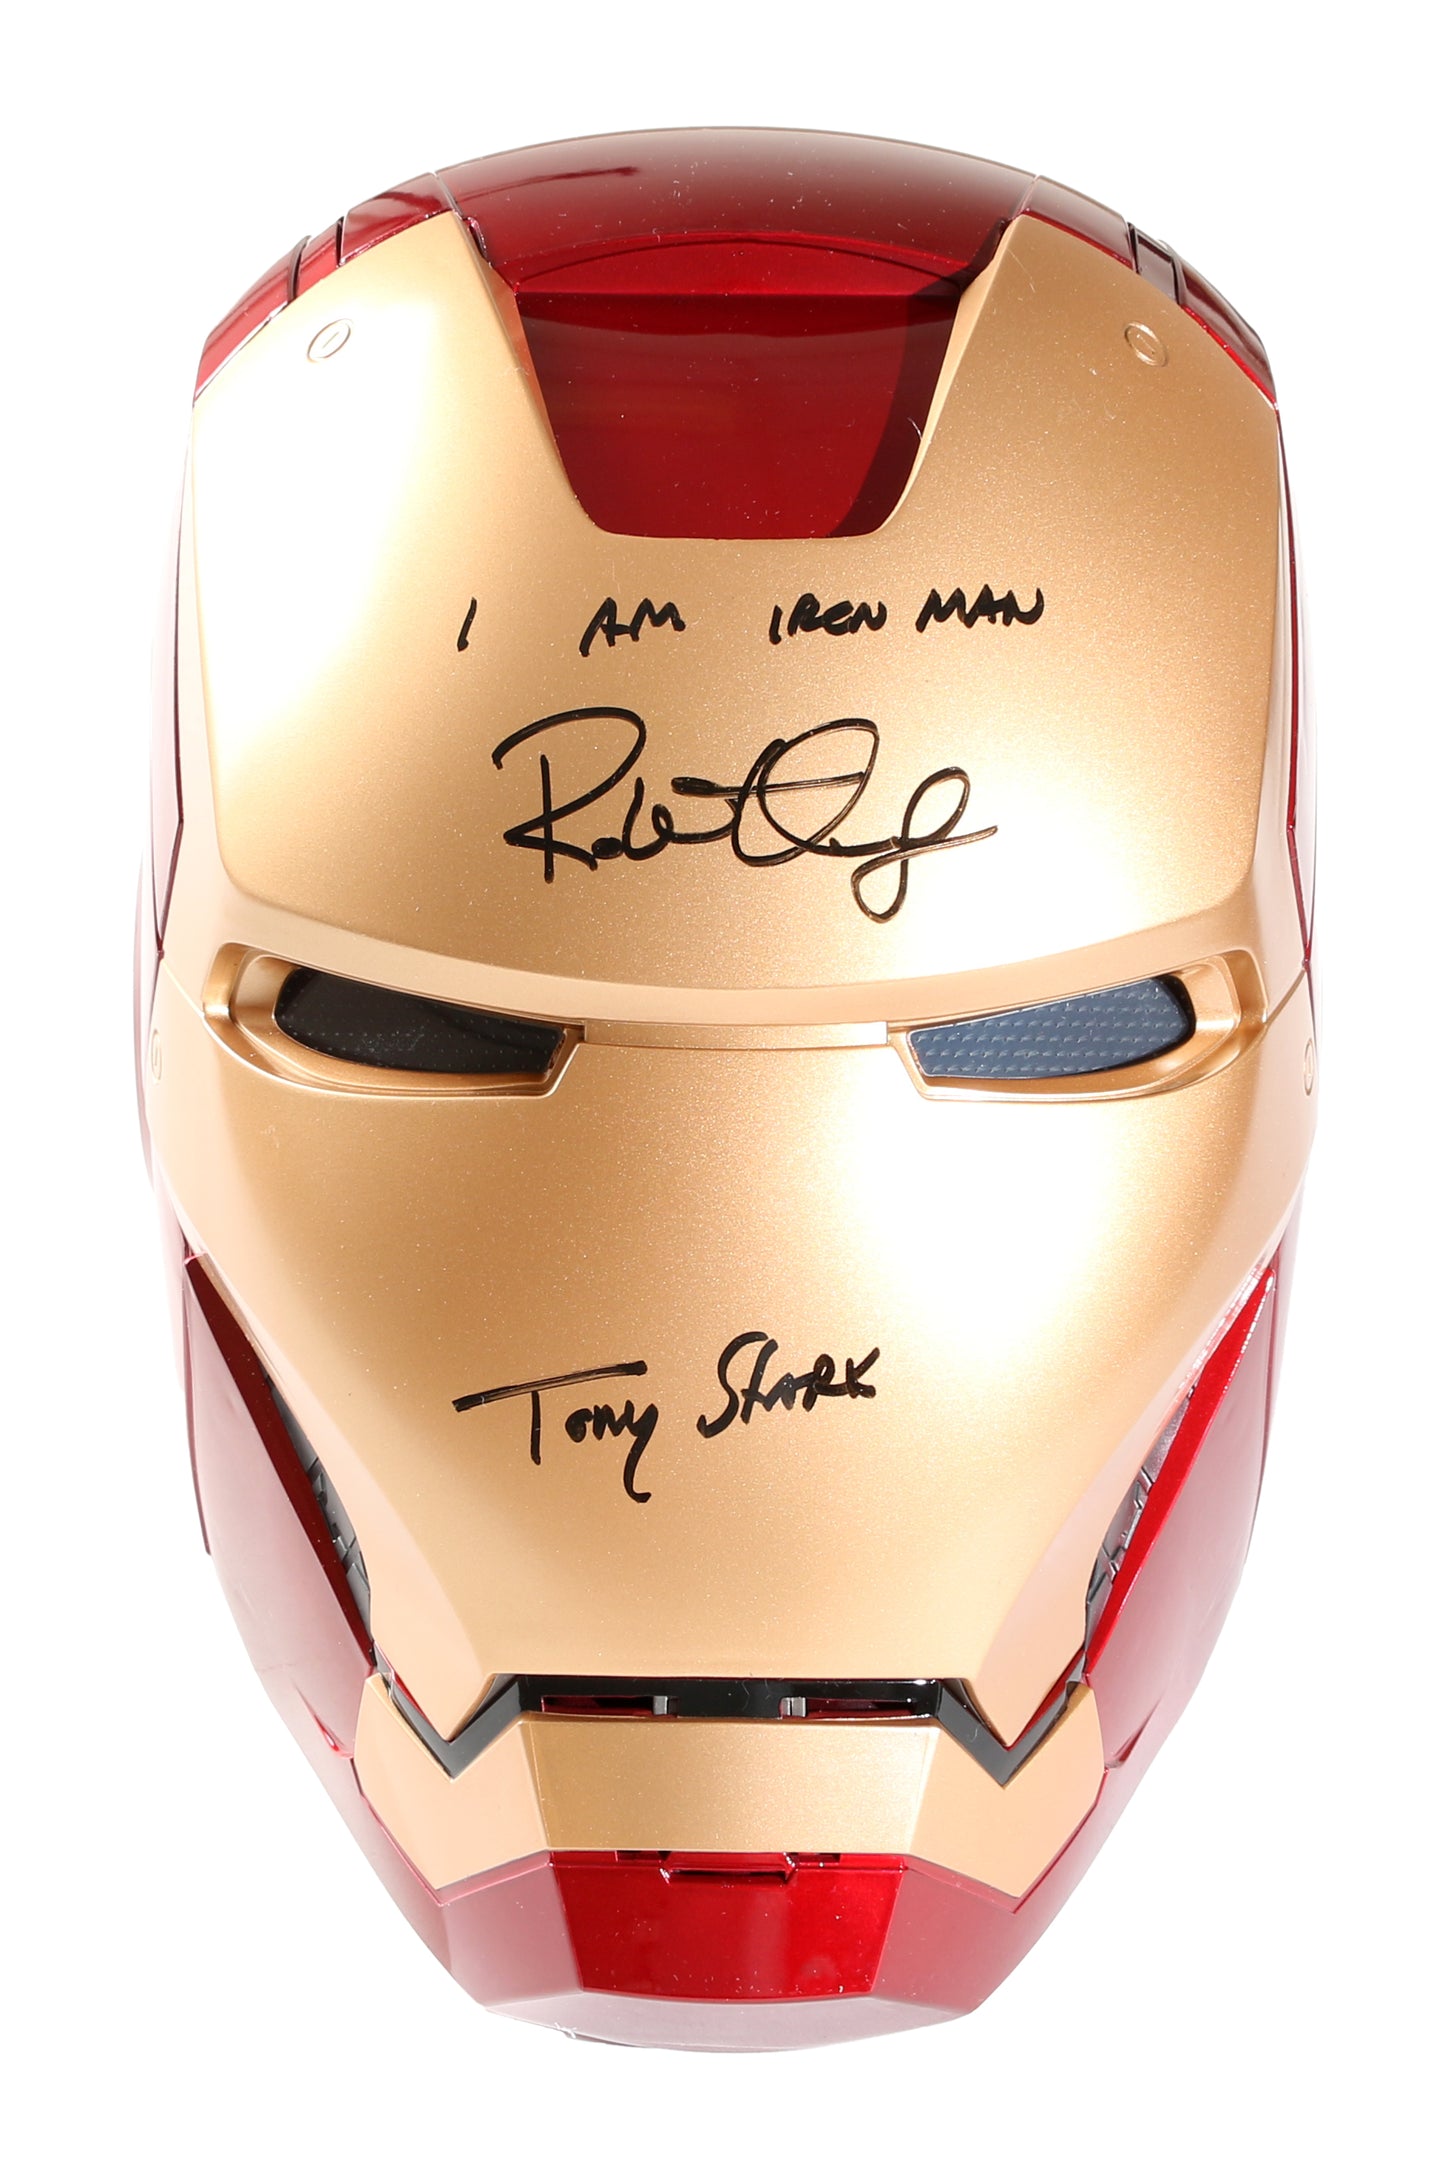 
                  
                    Iron Man Prop Replica Hasbro Legends Series Electronic Helmet (SWAU) Signed by Robert Downey Jr.
                  
                